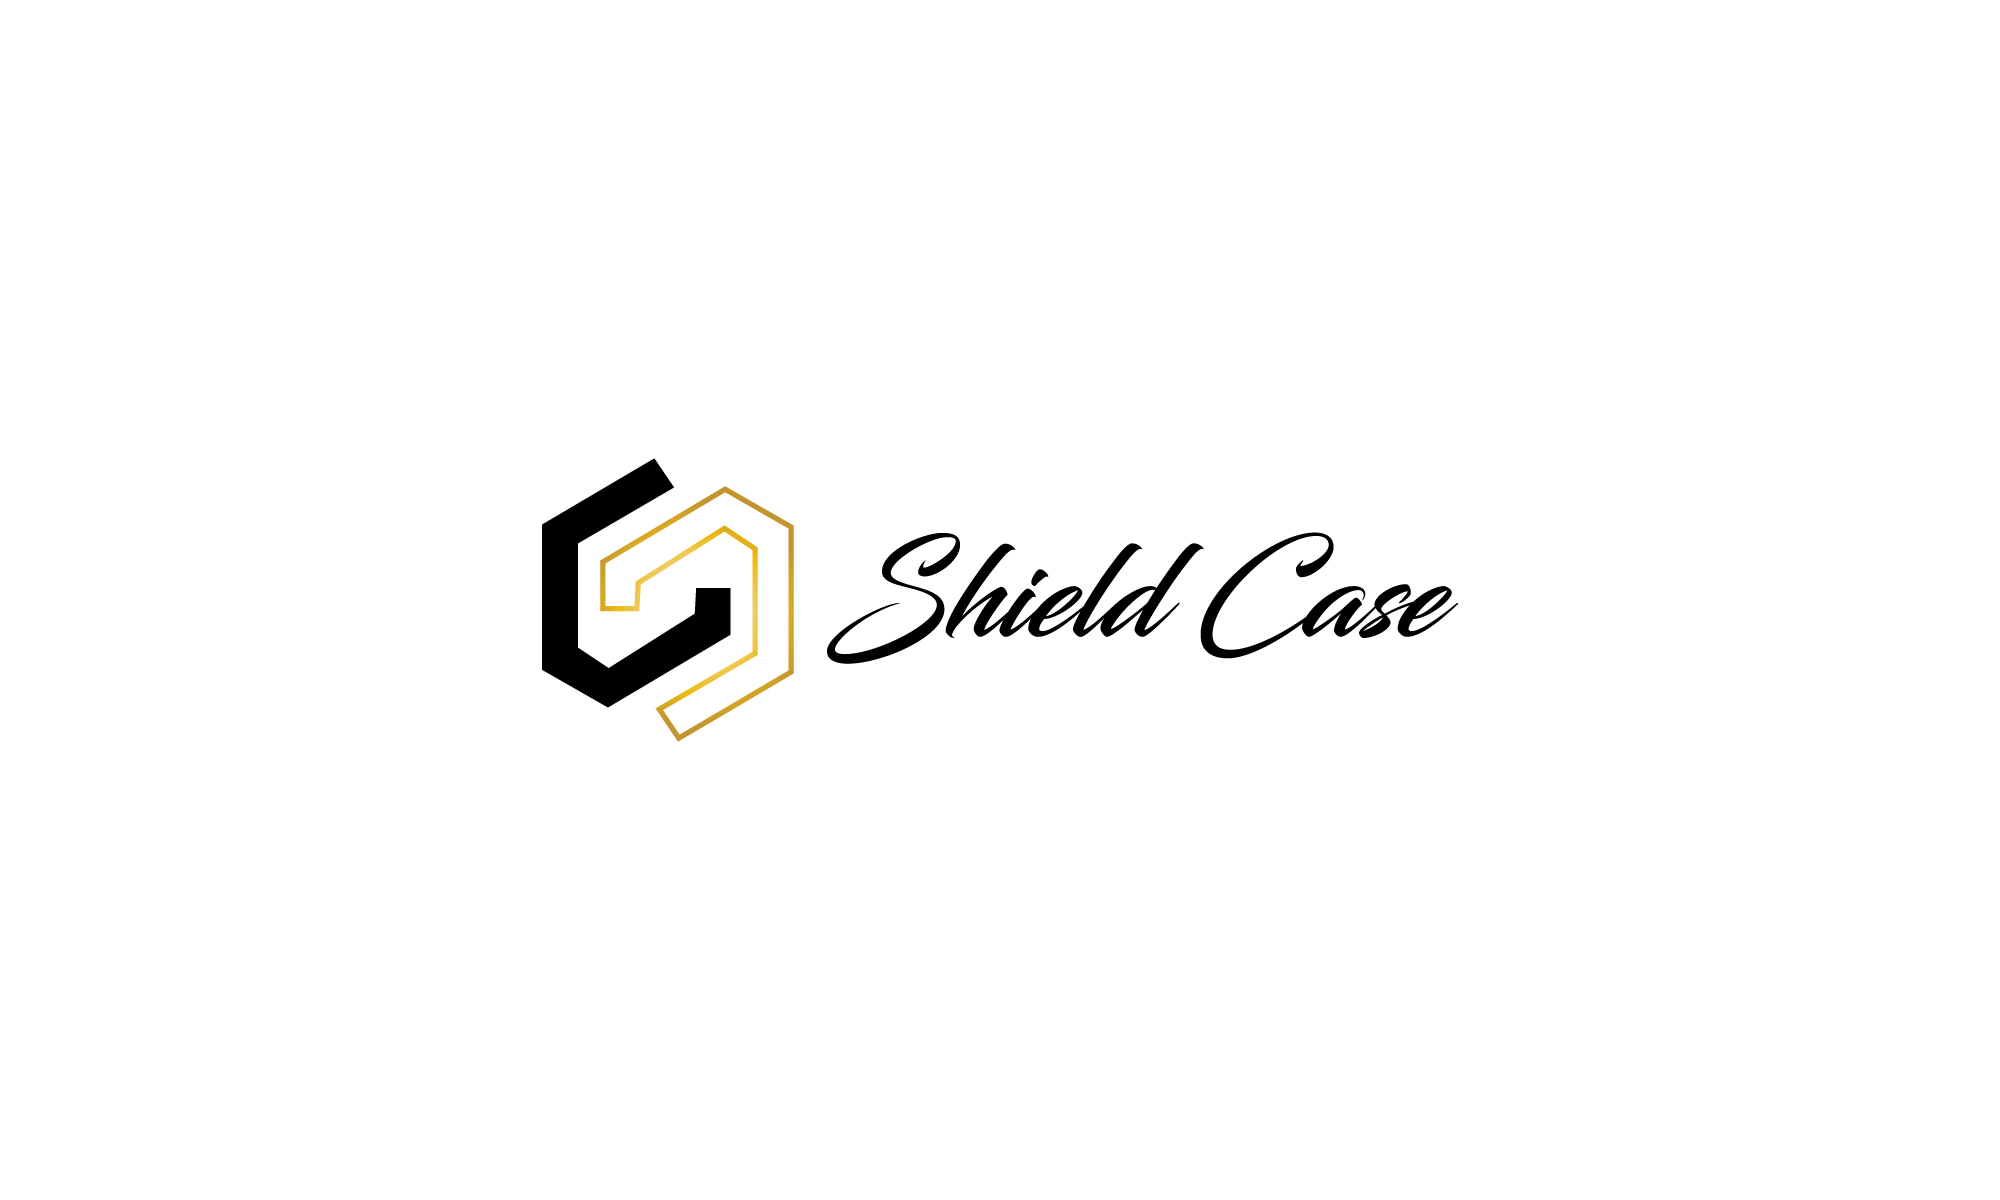 (c) Shieldcase.com